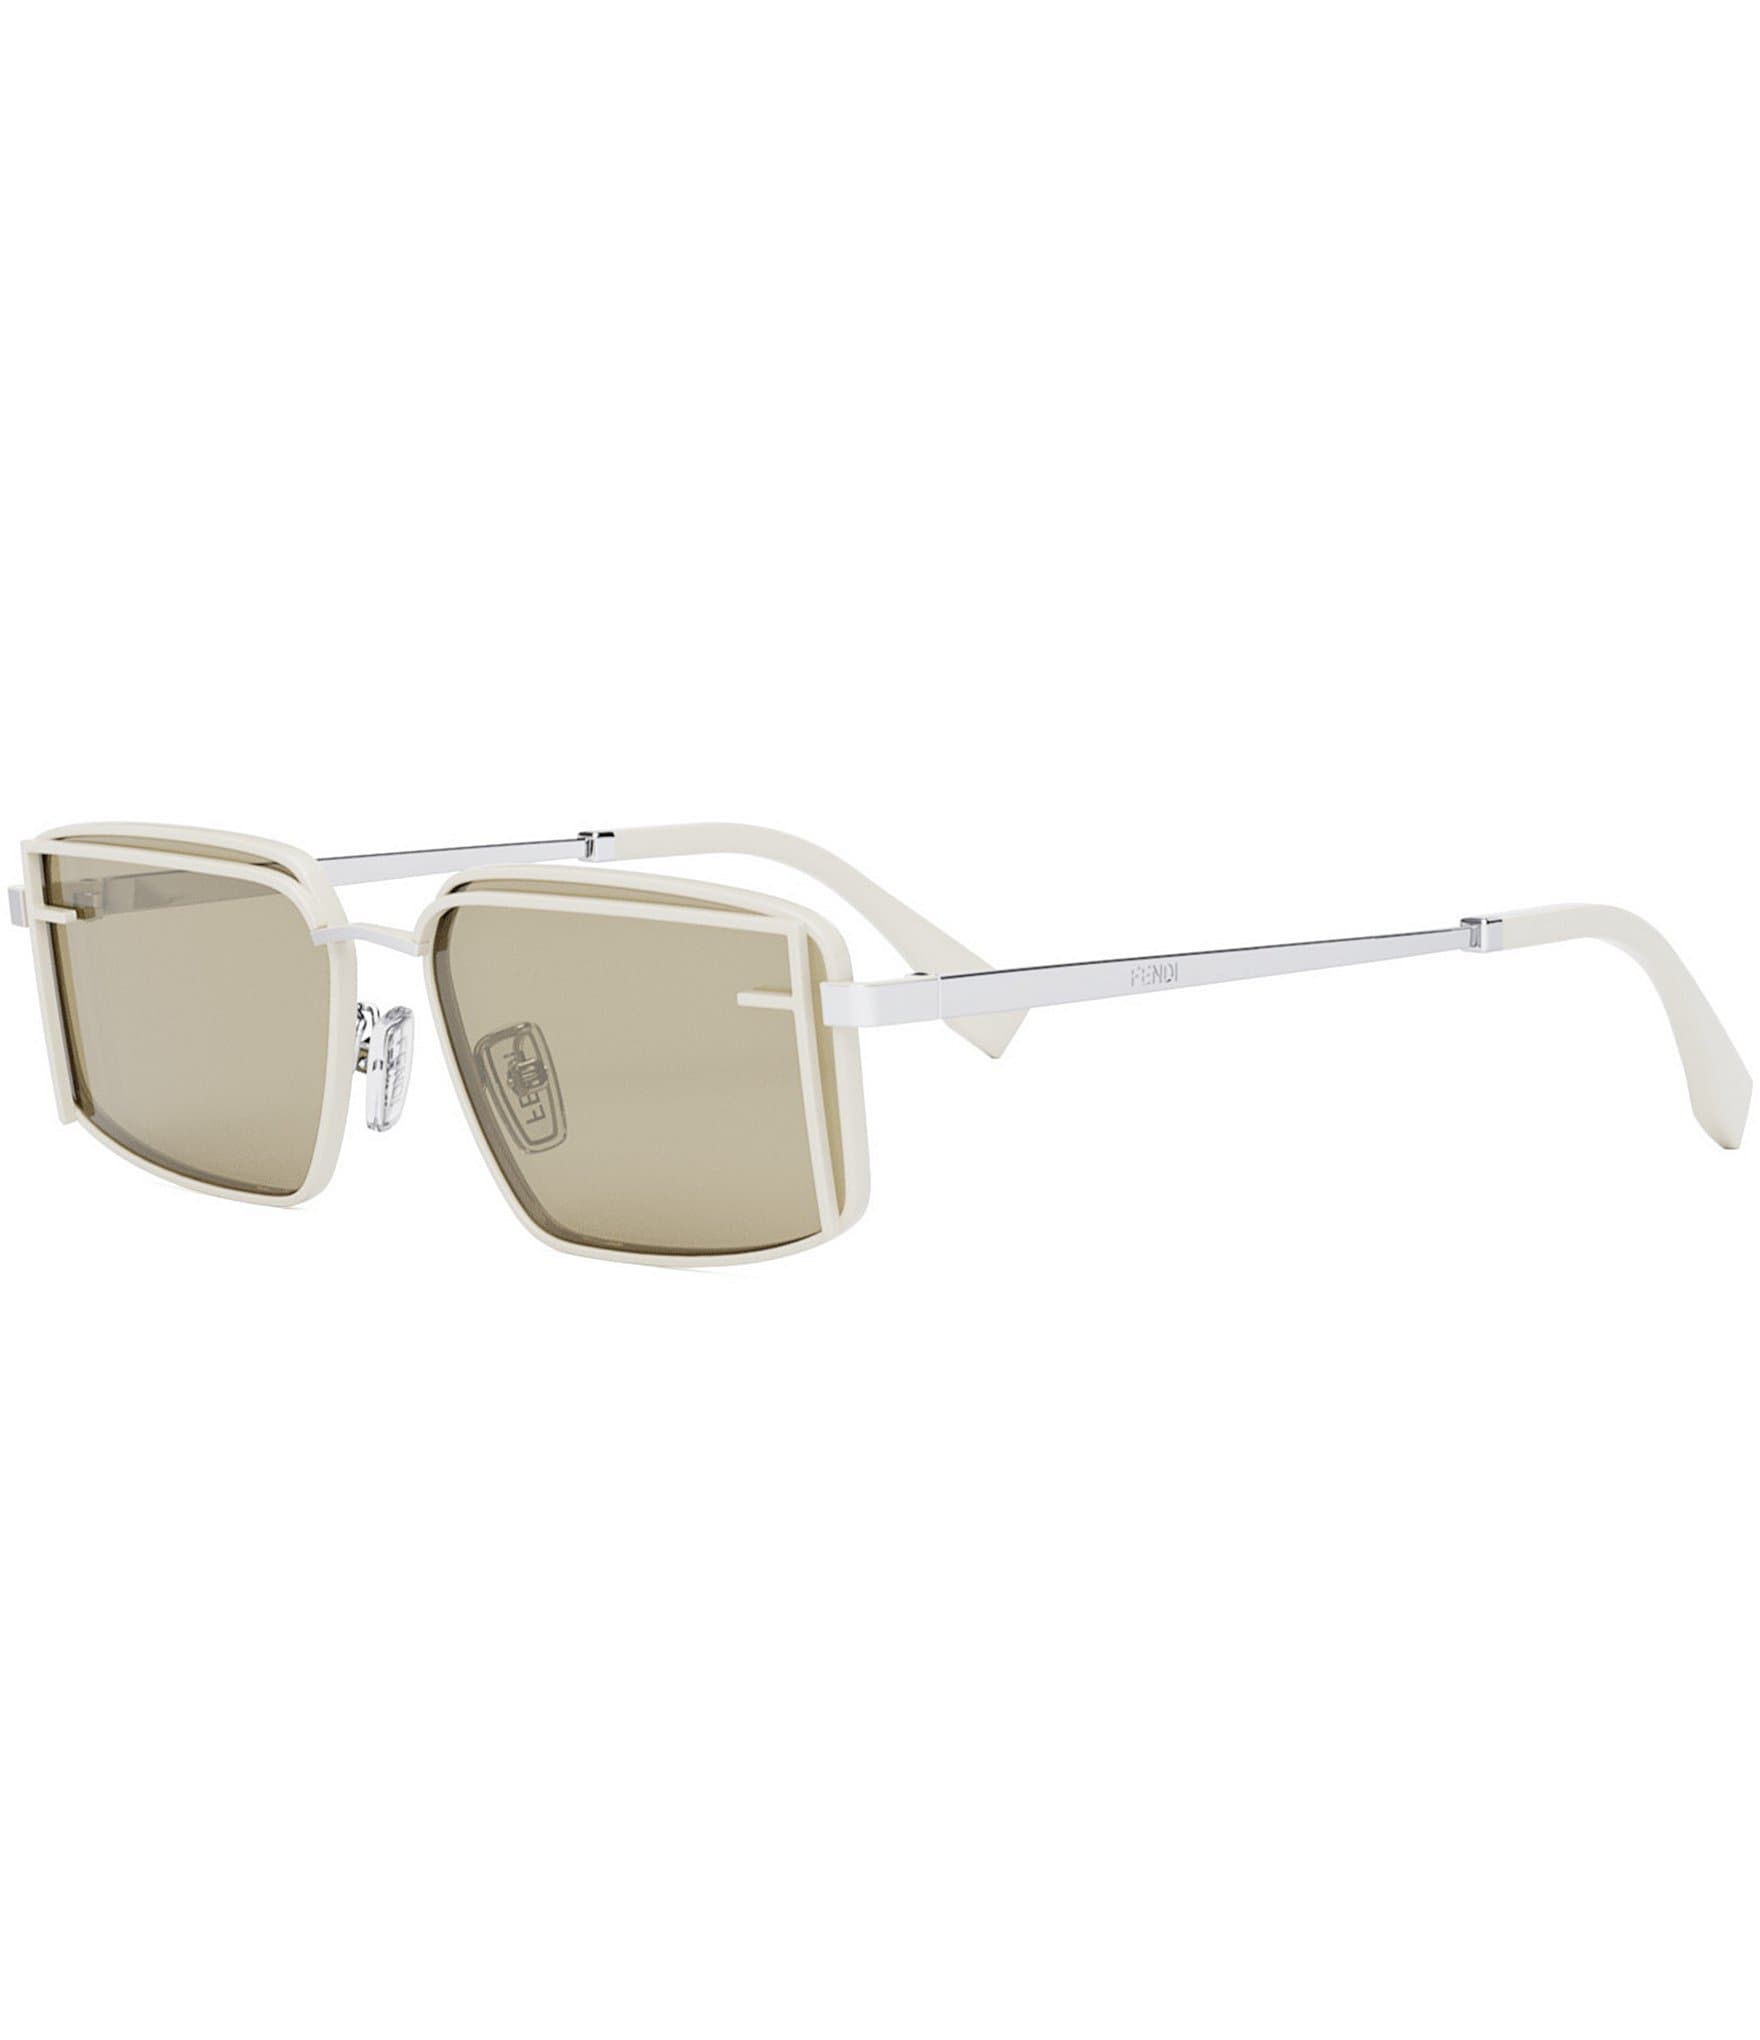 Fendi First Sight Rectangular Sunglasses in Multicoloured - Fendi